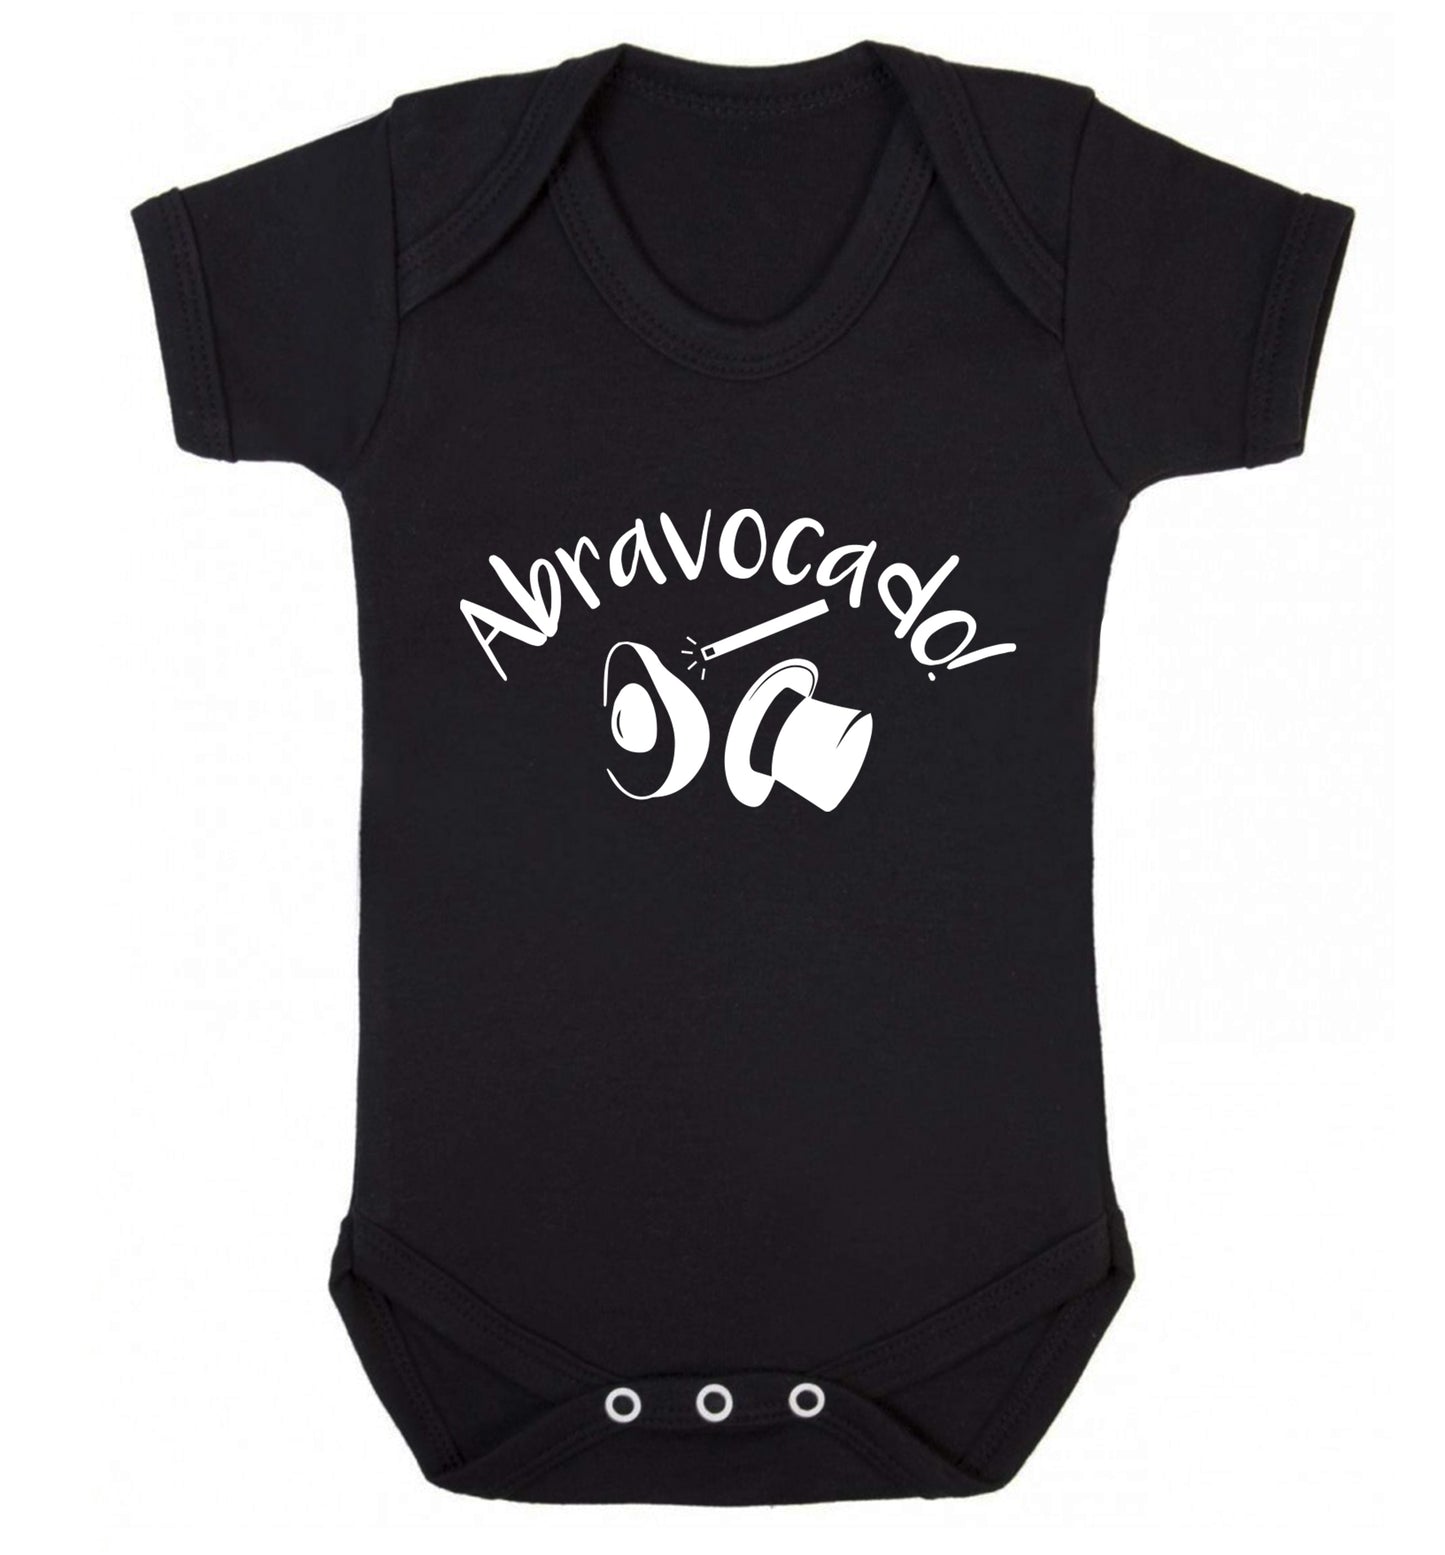 Abravocado Baby Vest black 18-24 months